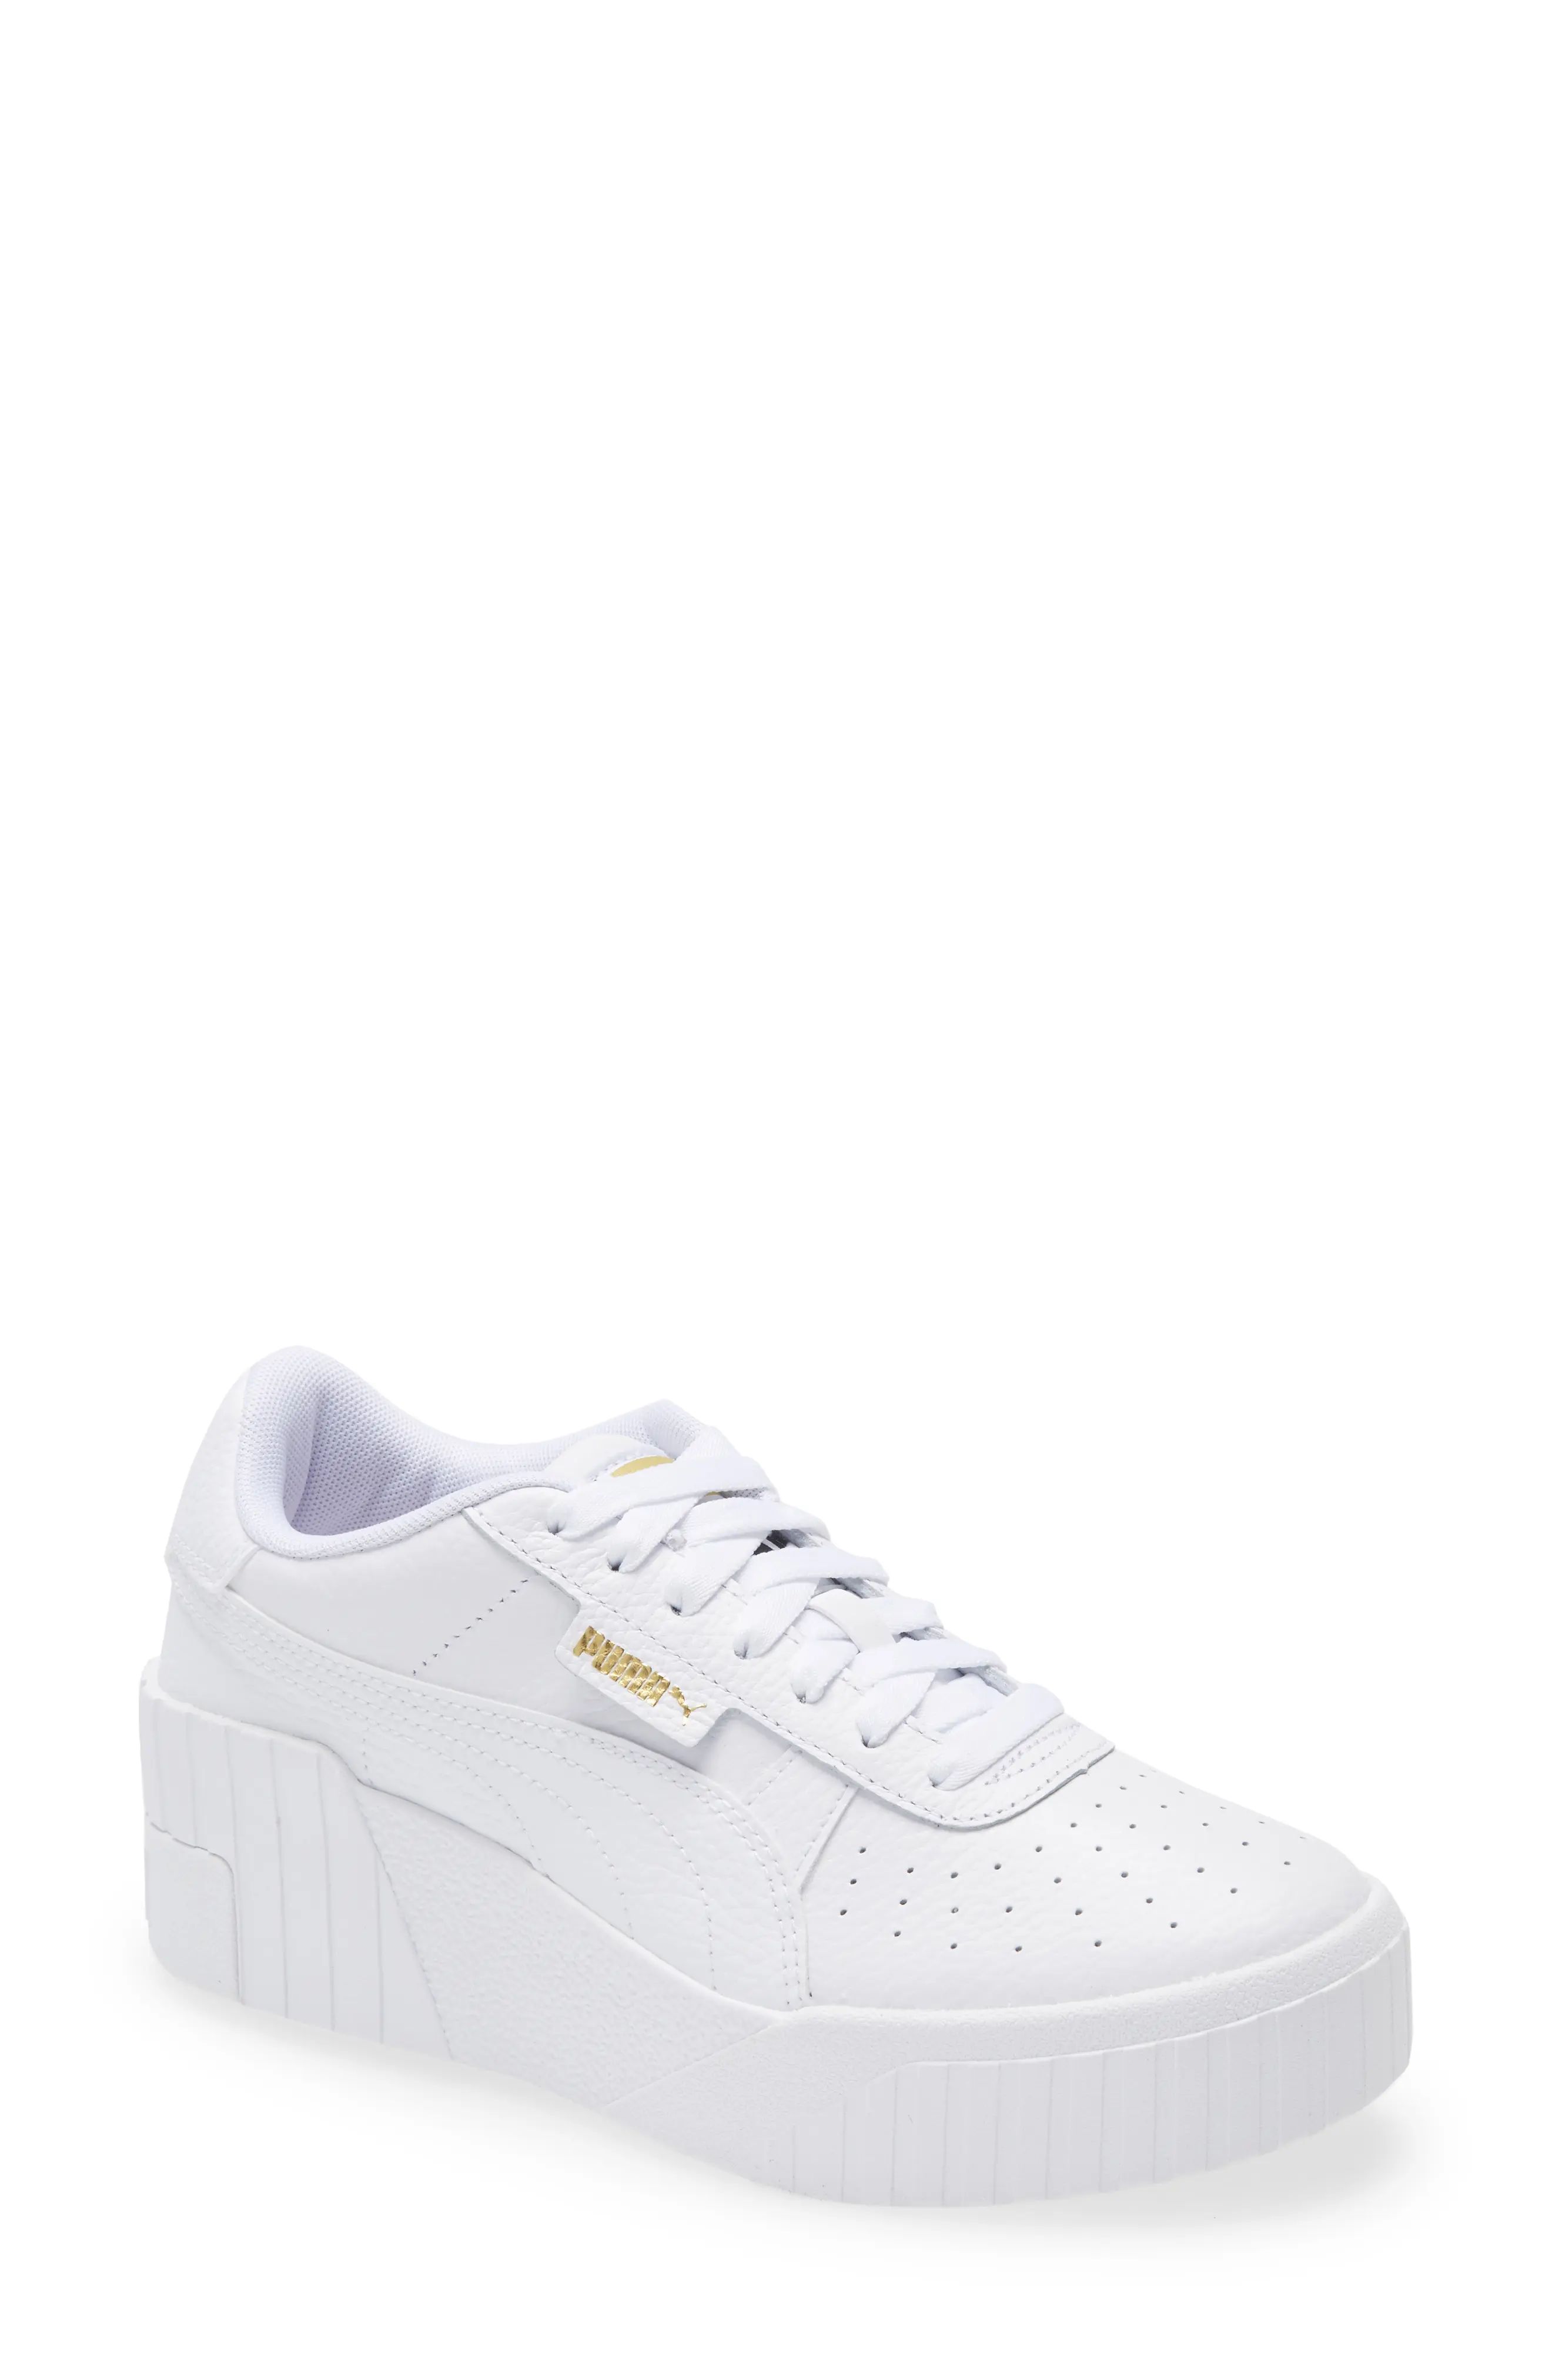 PUMA Cali Wedge Sneaker in Puma White-Puma White at Nordstrom, Size 9.5 | Nordstrom